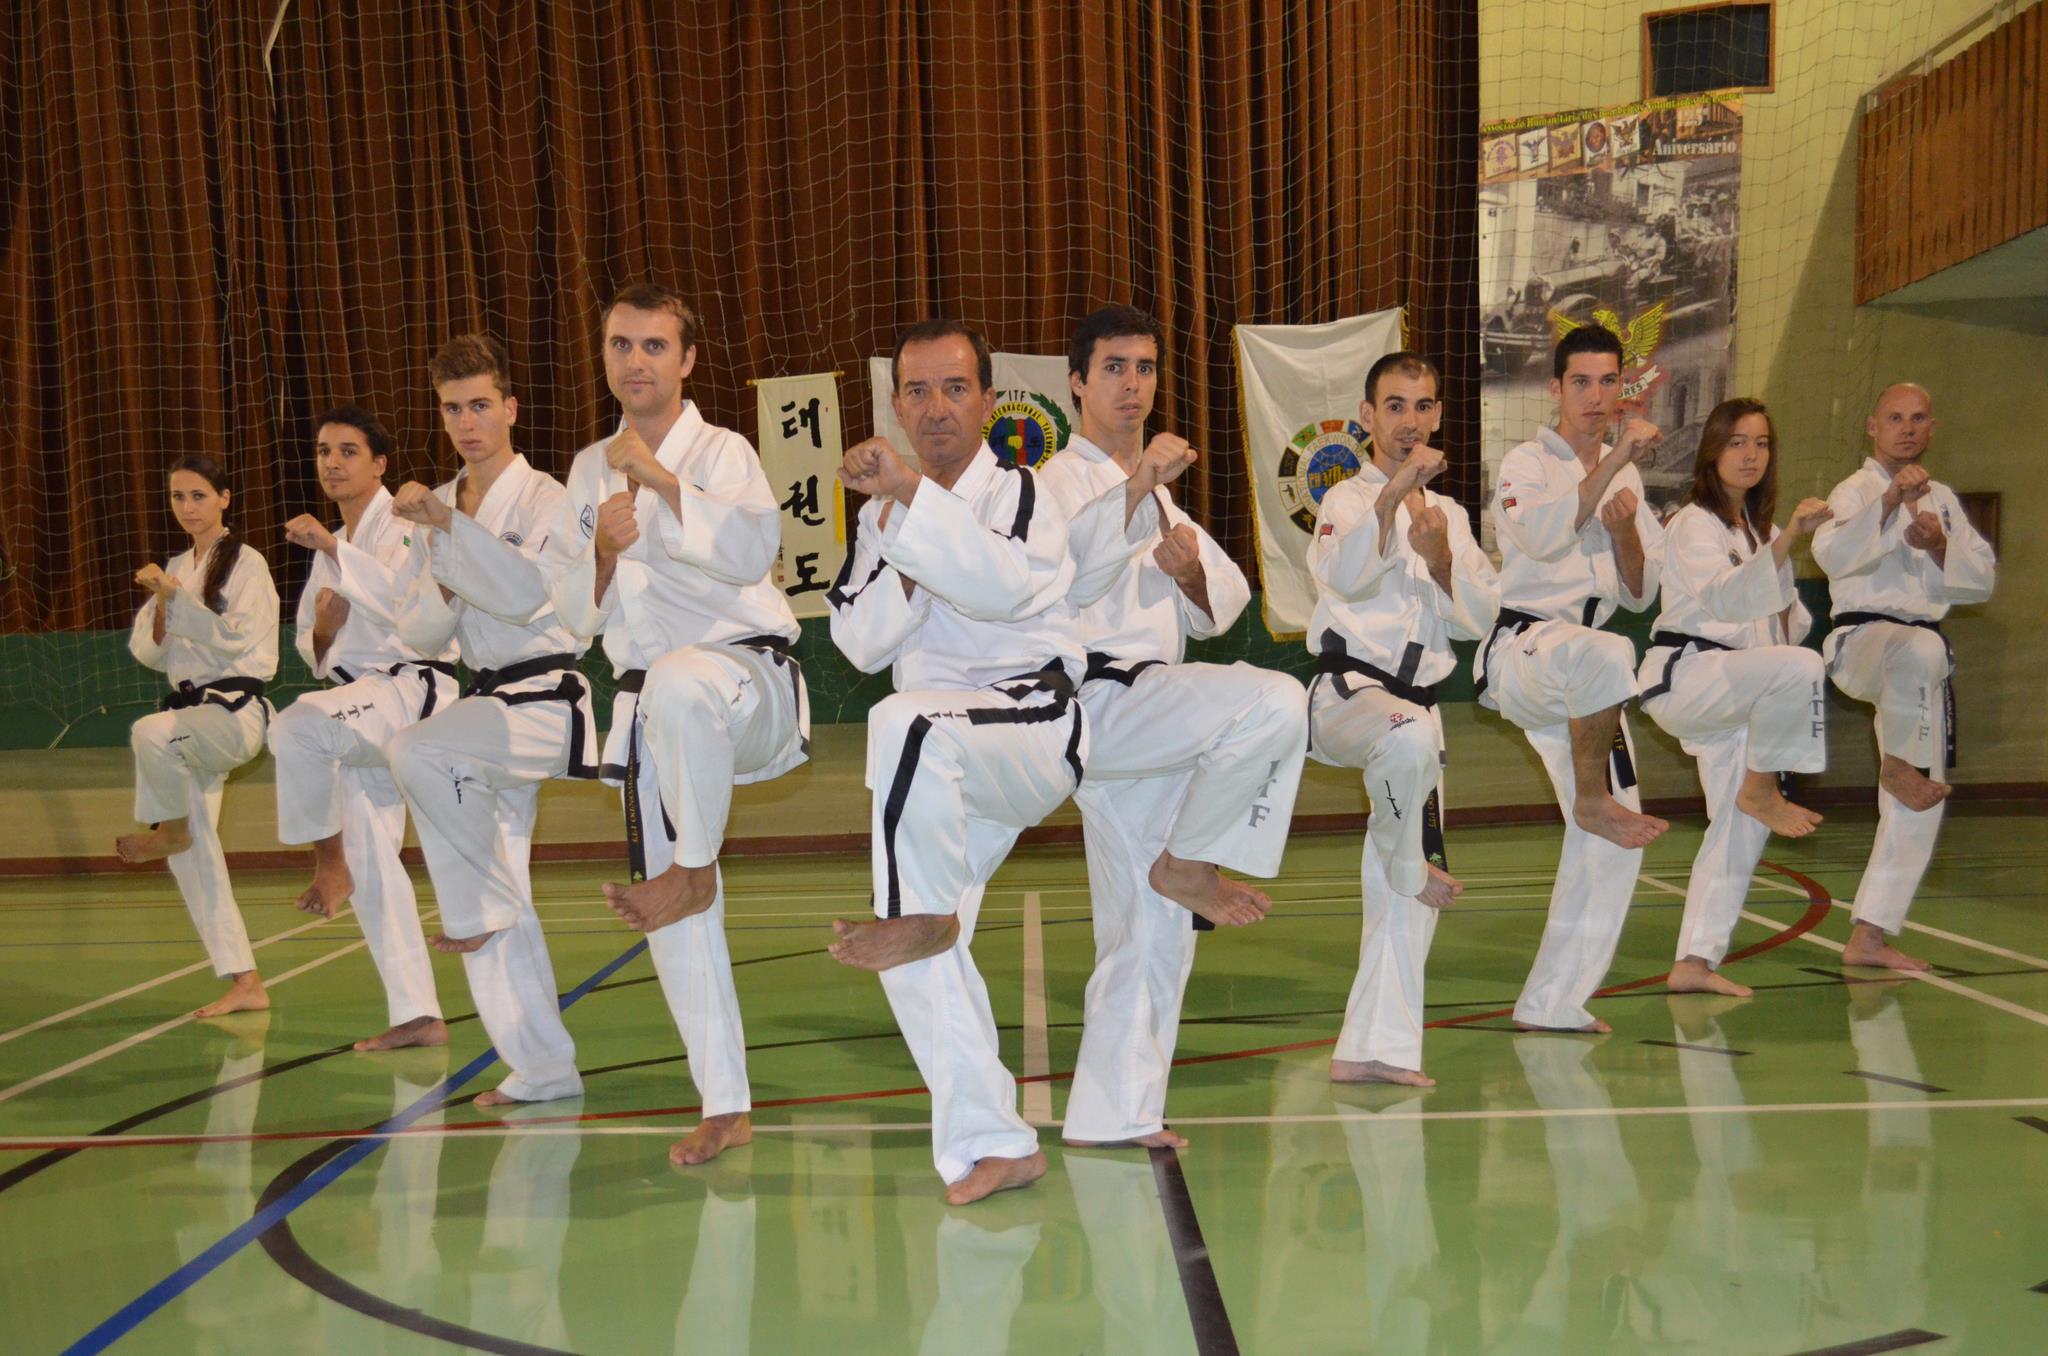 Aulas de Taekwondo